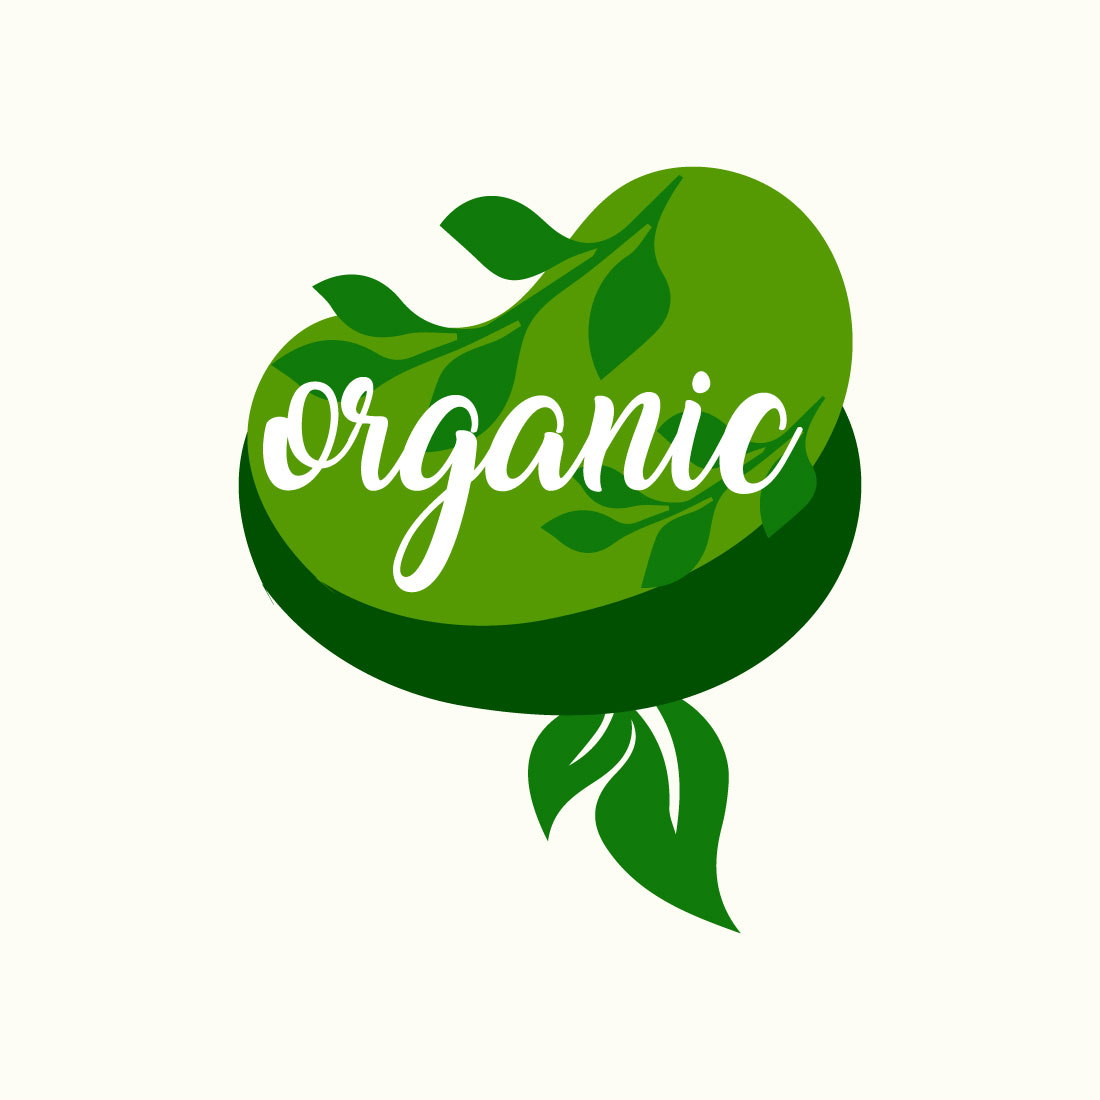 Free environmental friendly logo cover image.